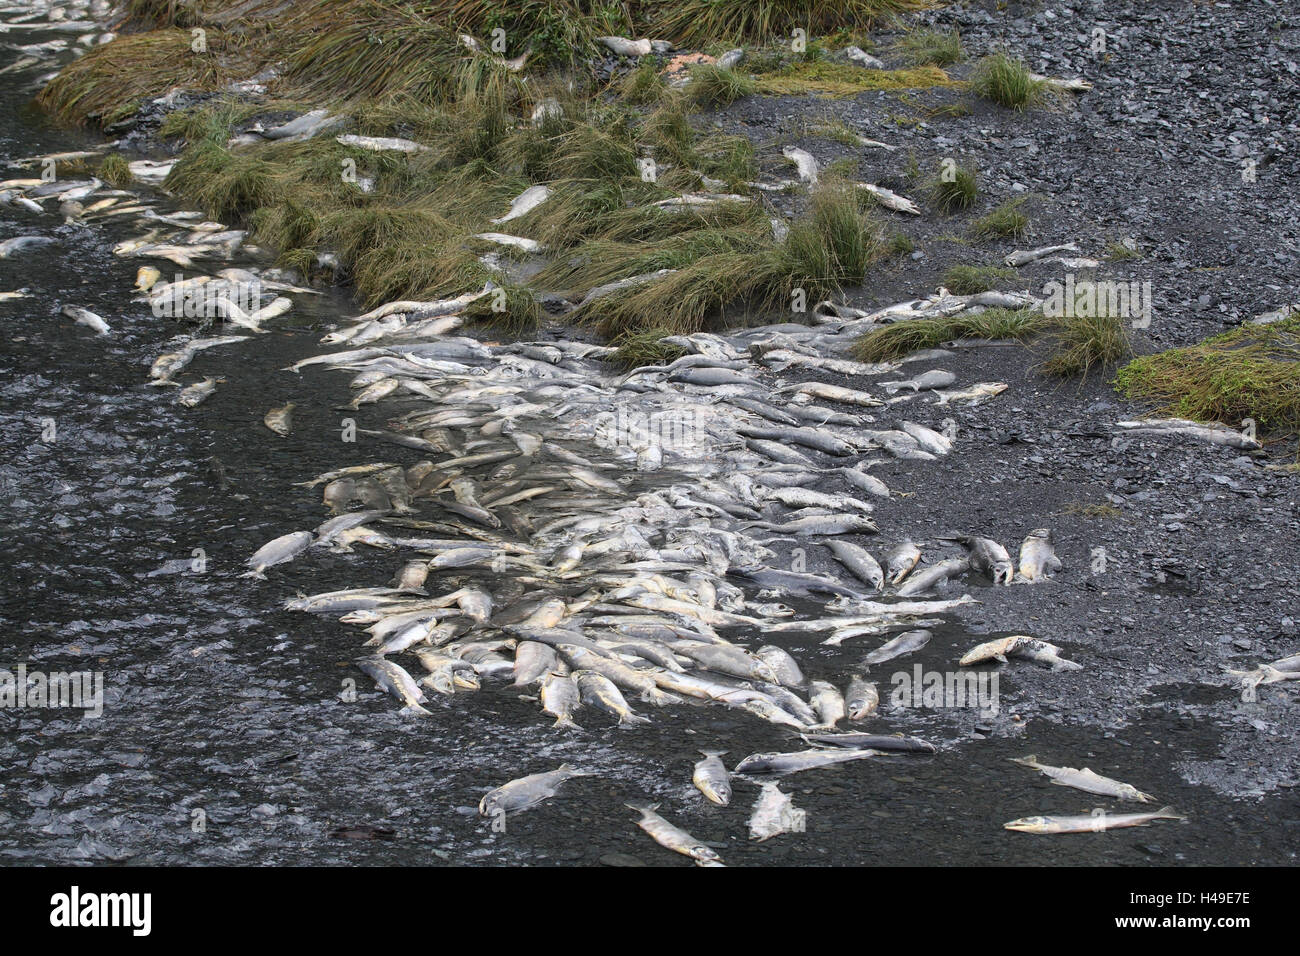 Salmons, deadly, riverside, spawning season, Stock Photo